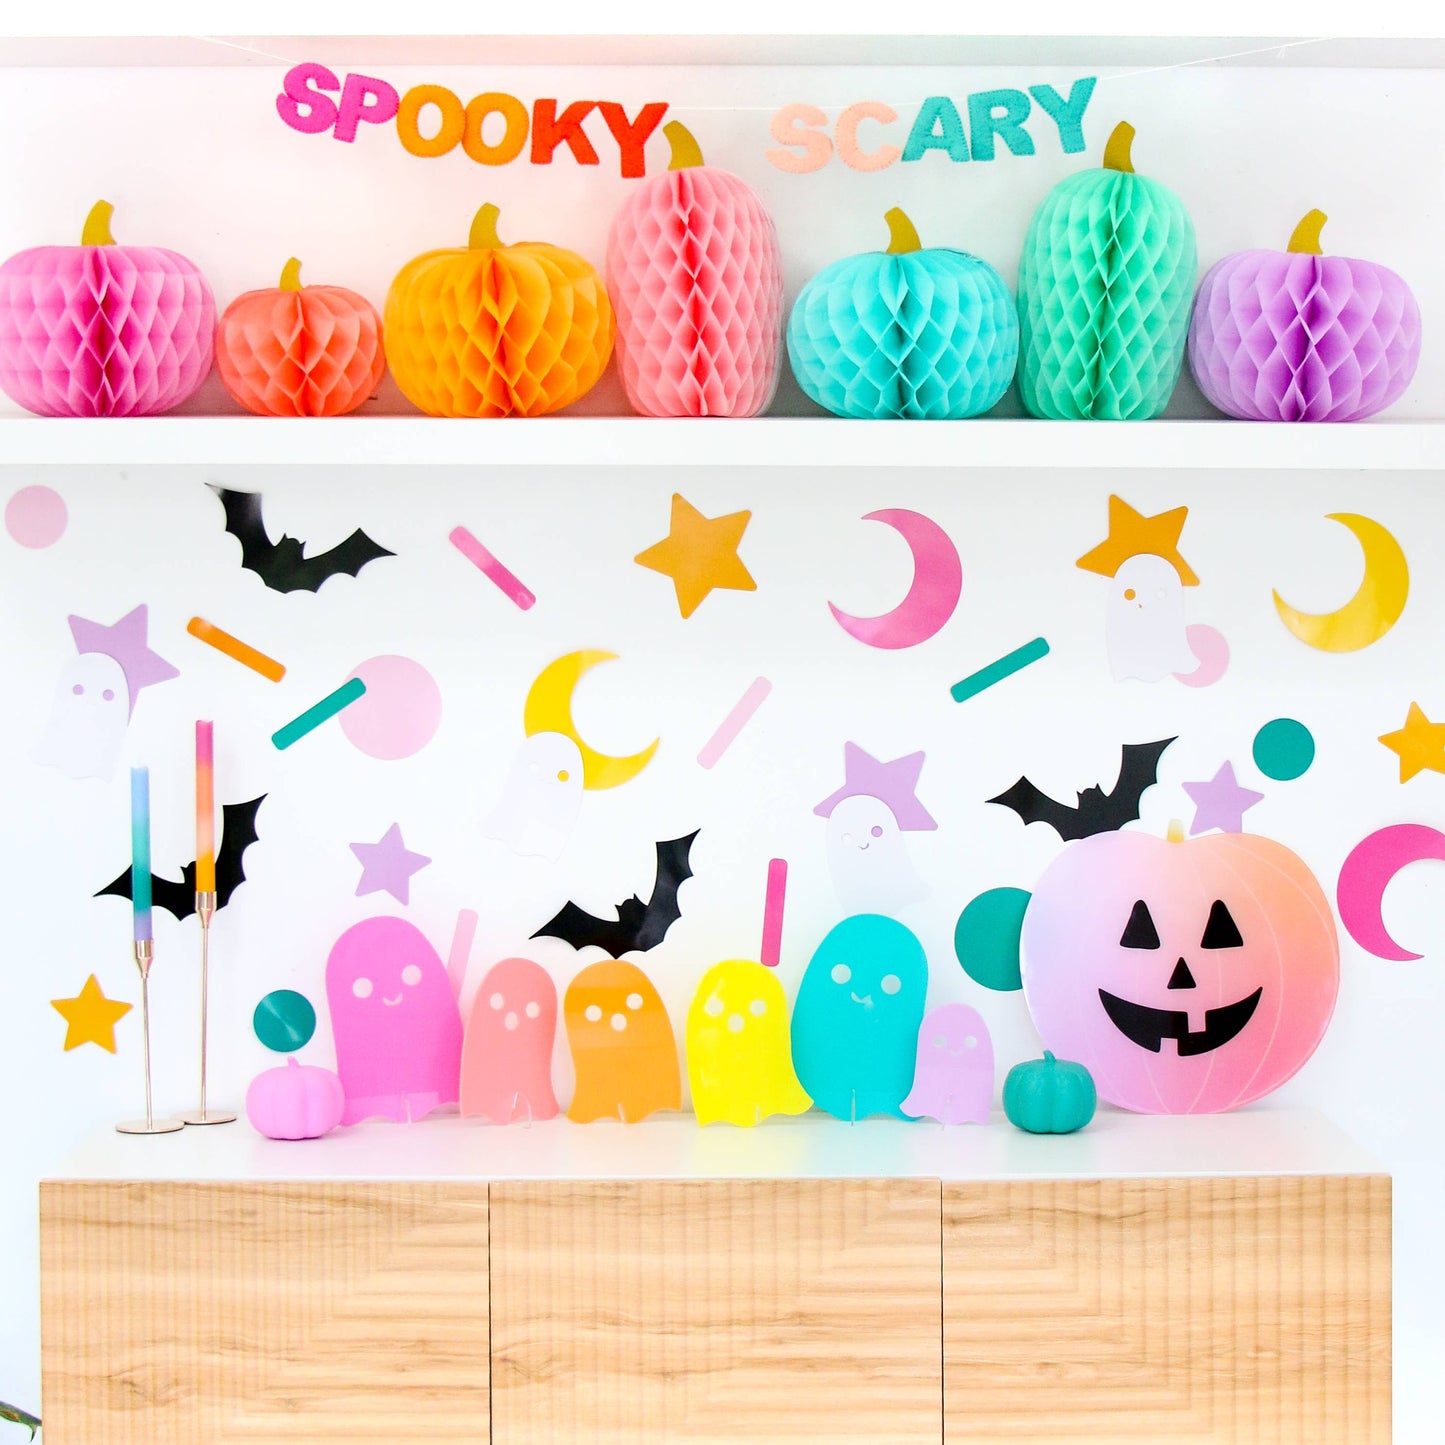 Spooktastic Giant Halloween Confetti Mix